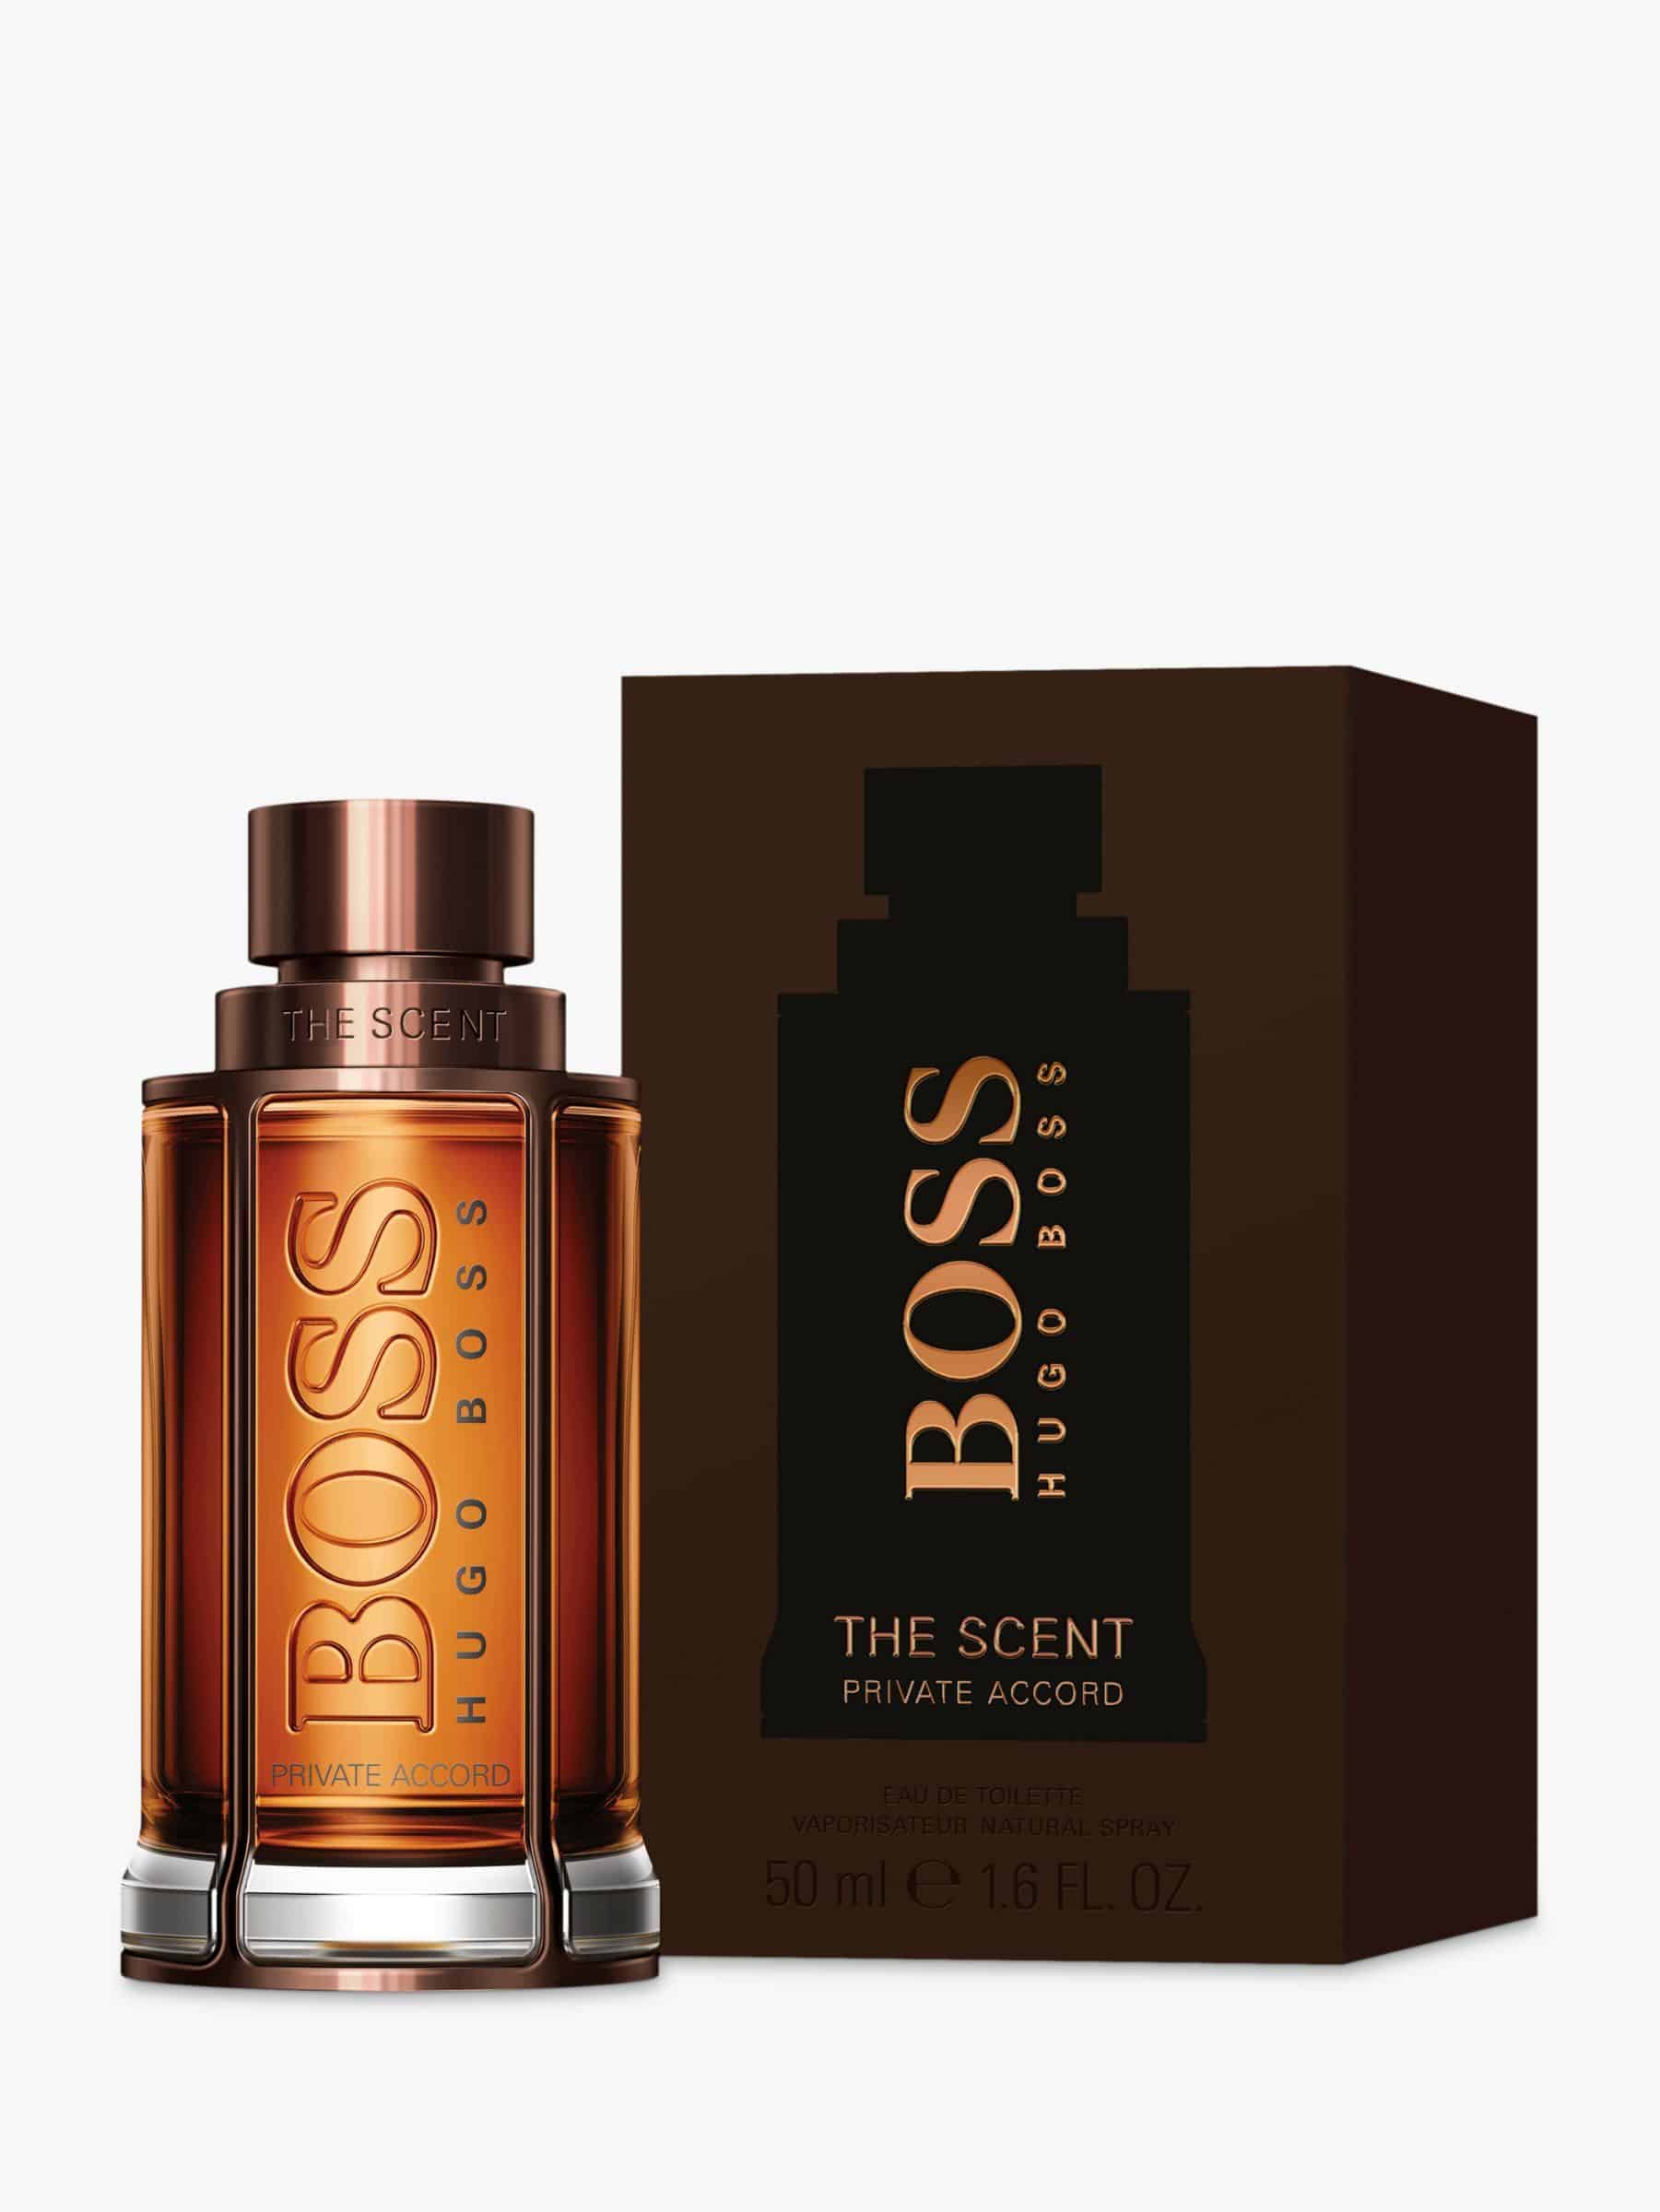 hugo boss brown perfume